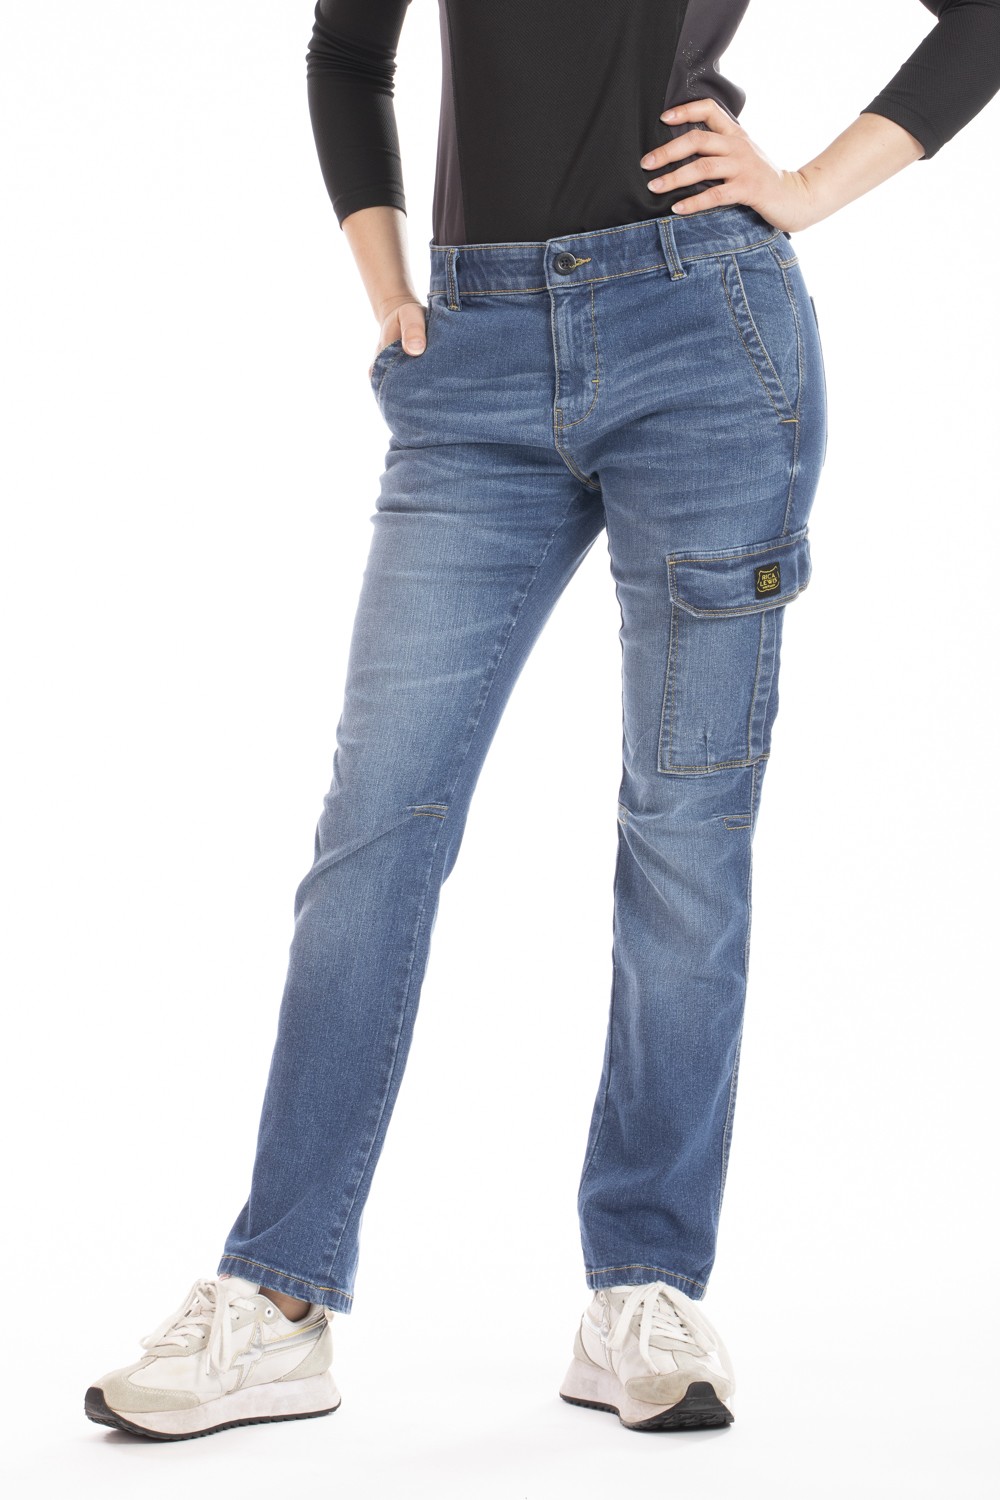 Jeans travail femme confort stretch Betty Rica lewis bleu